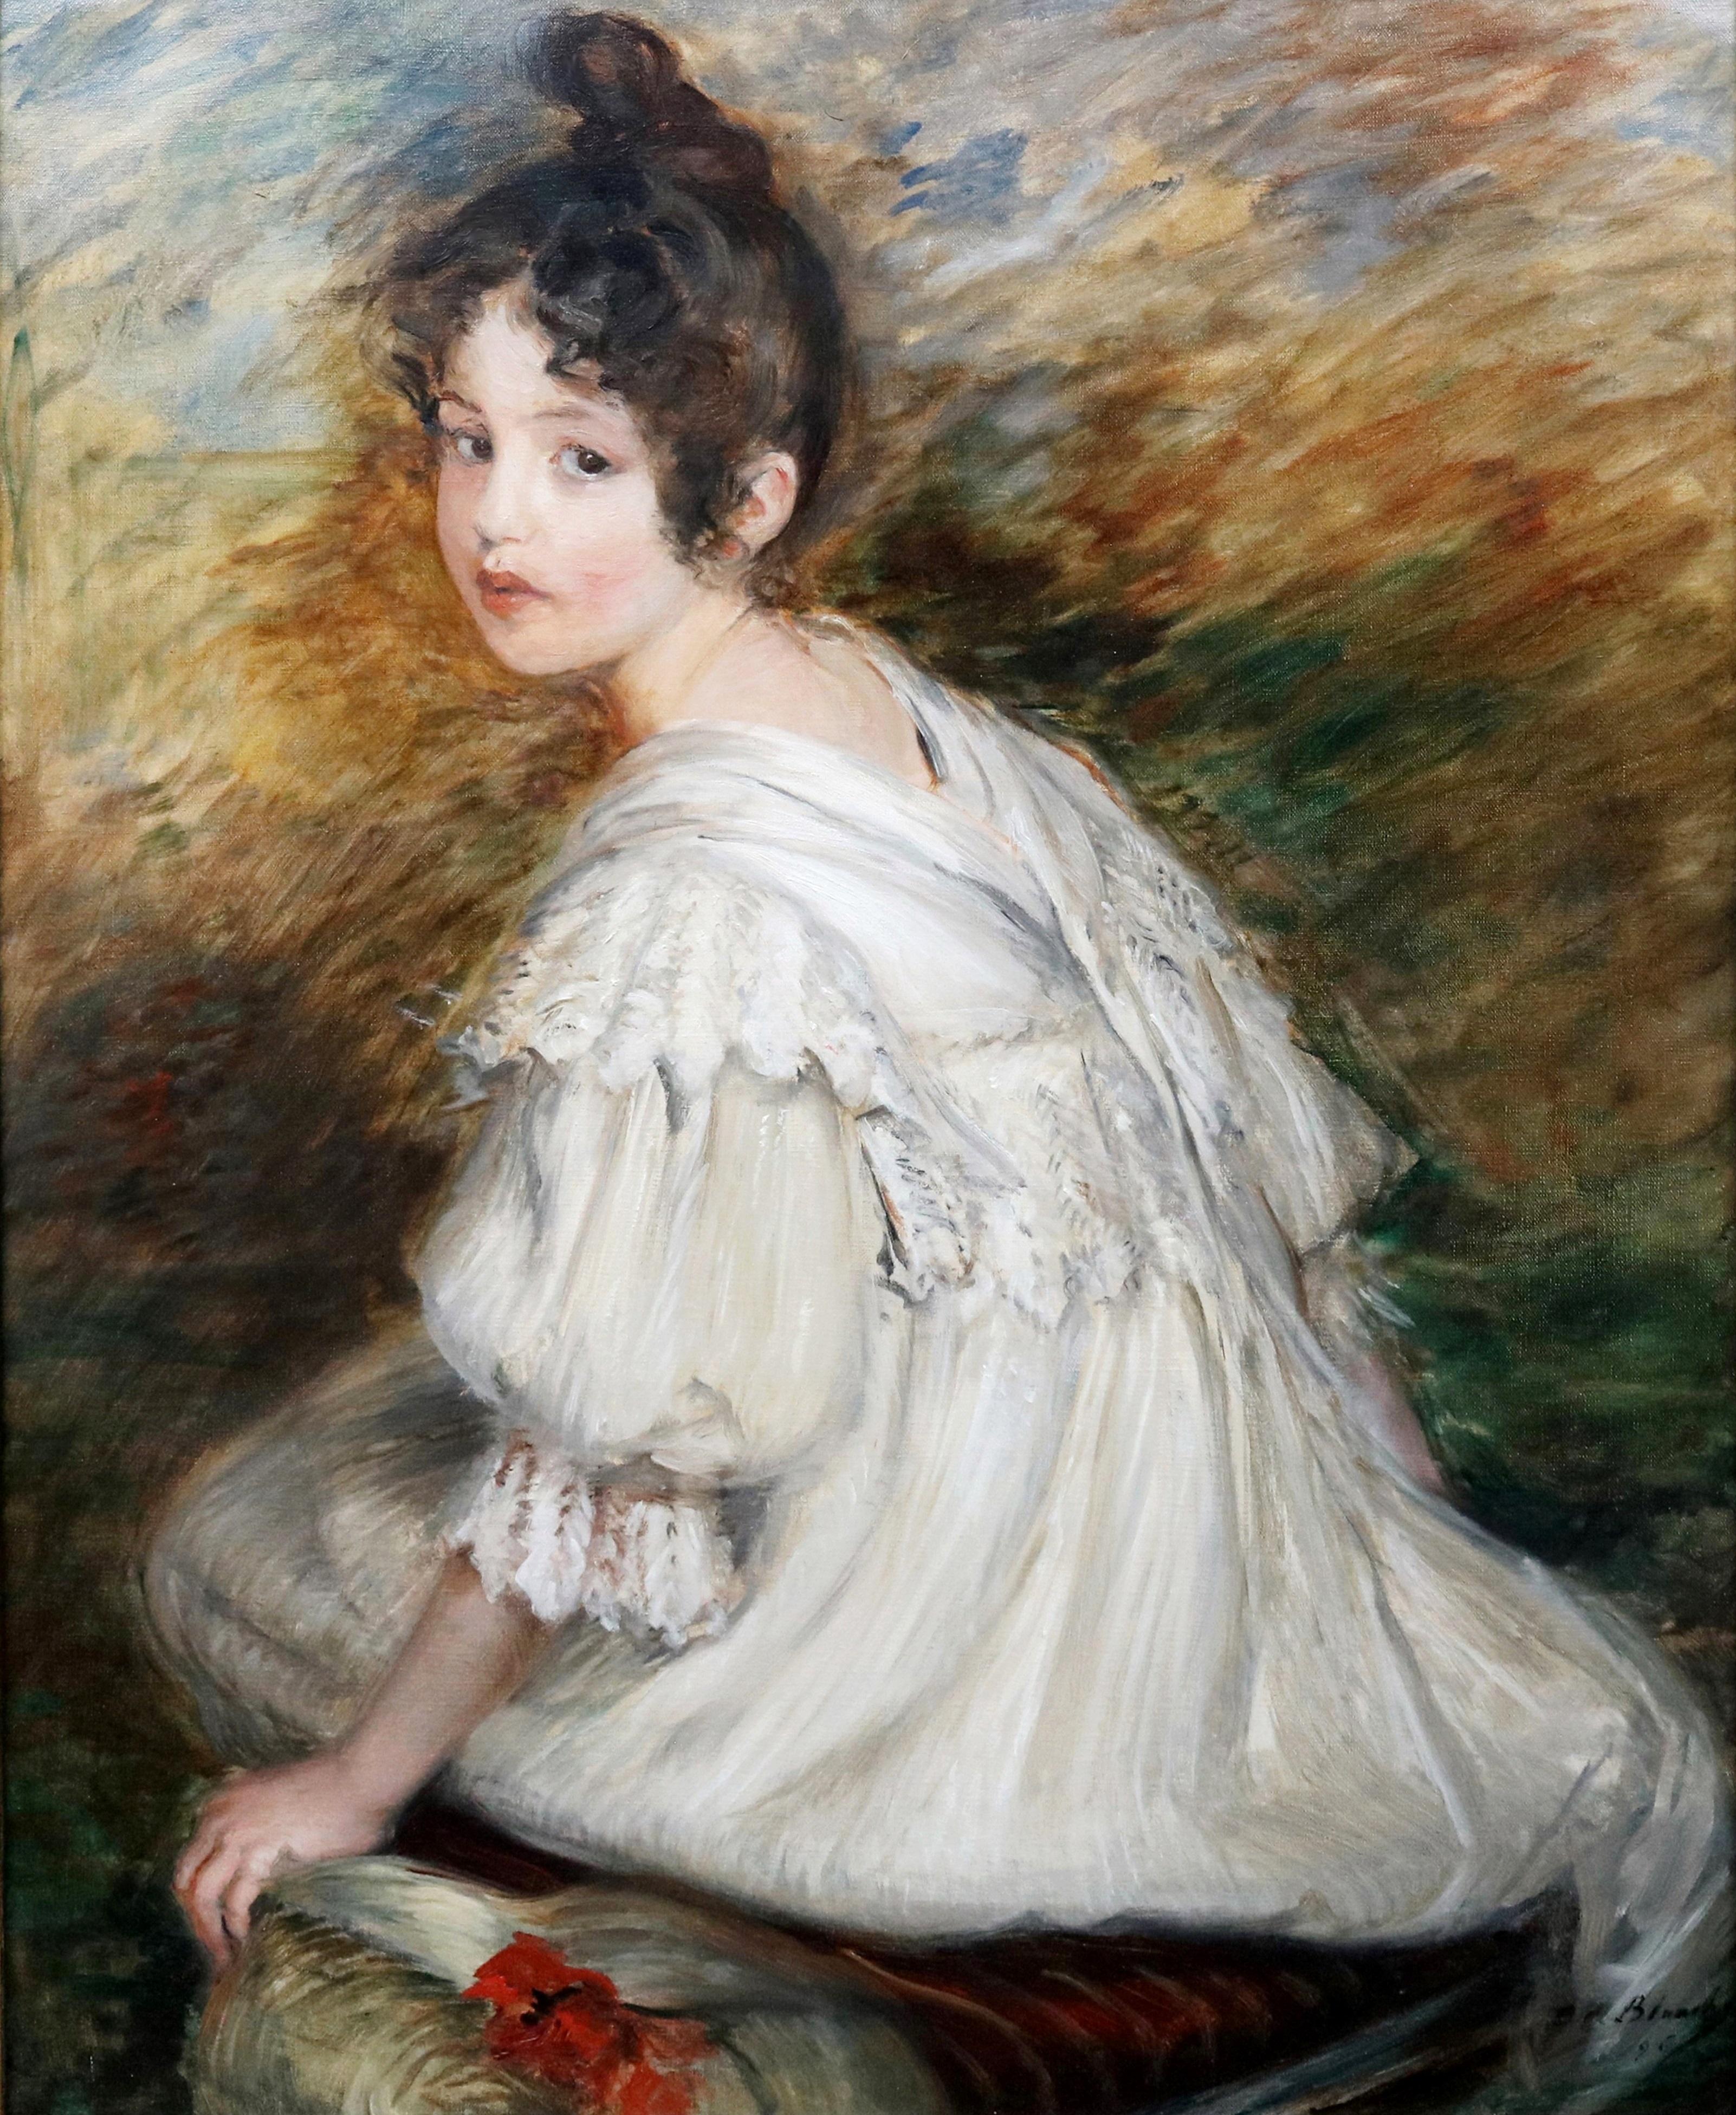 Jeune Fille en Blanc - Ölgemälde des 19. Jahrhunderts, Porträt einer jungen Pariser Schönheit  (Impressionismus), Painting, von Jacques Emile Blanche